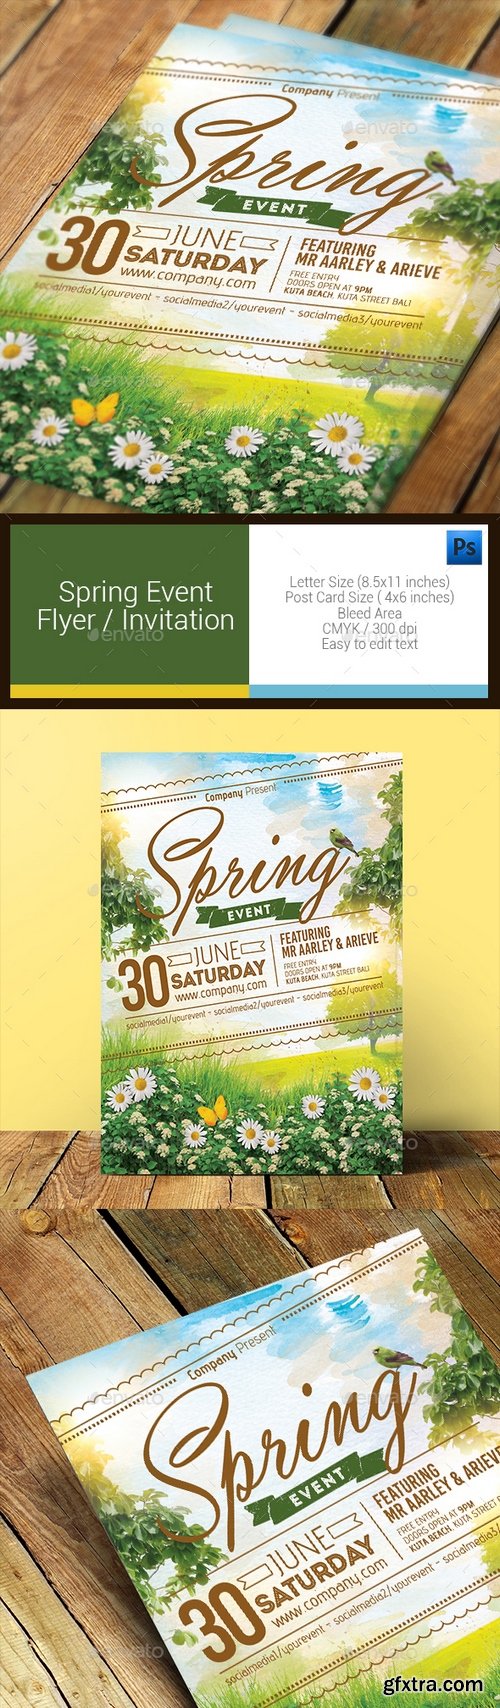 Graphicriver - Spring Event Flyer / Invitation 11086093